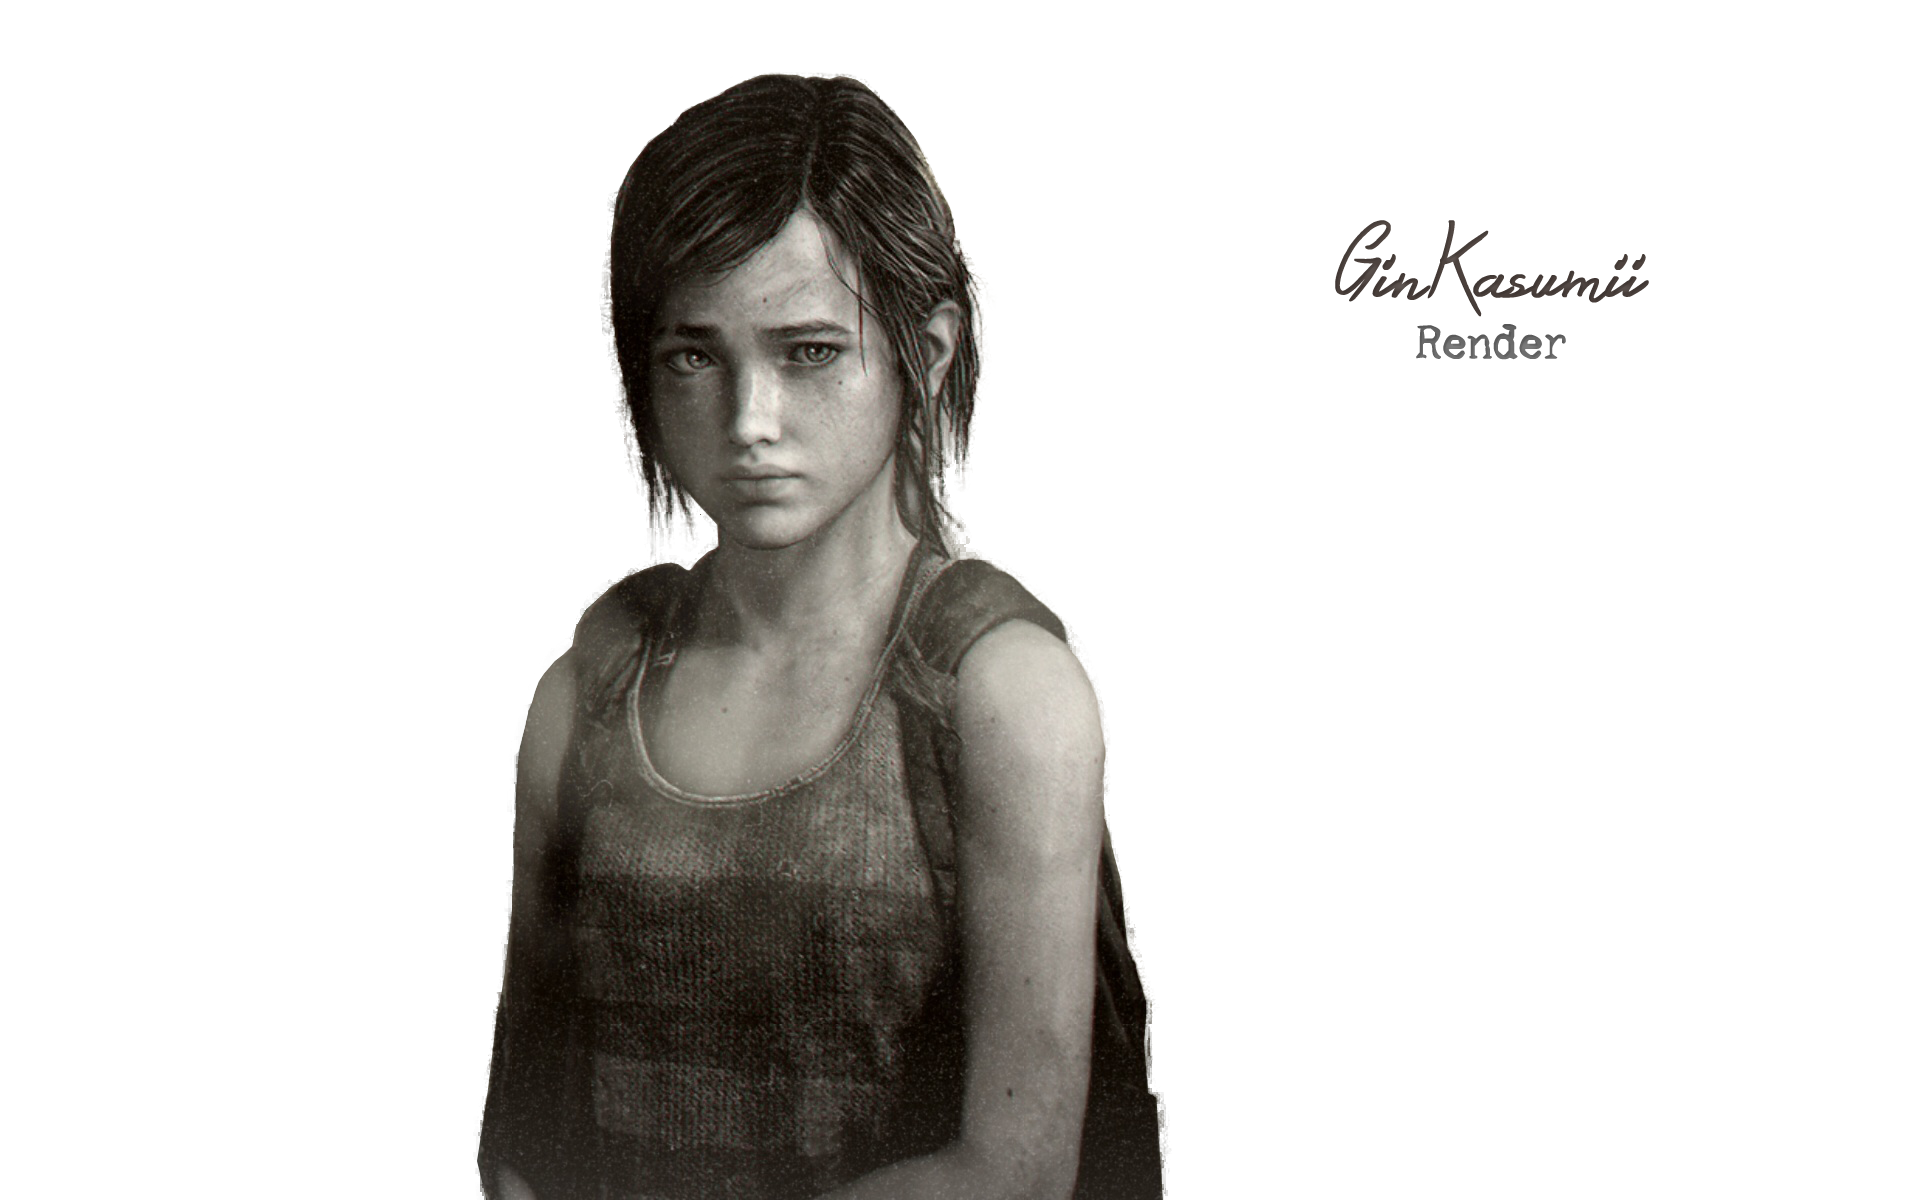 Download Free Ellie The Last Of Us File ICON favicon